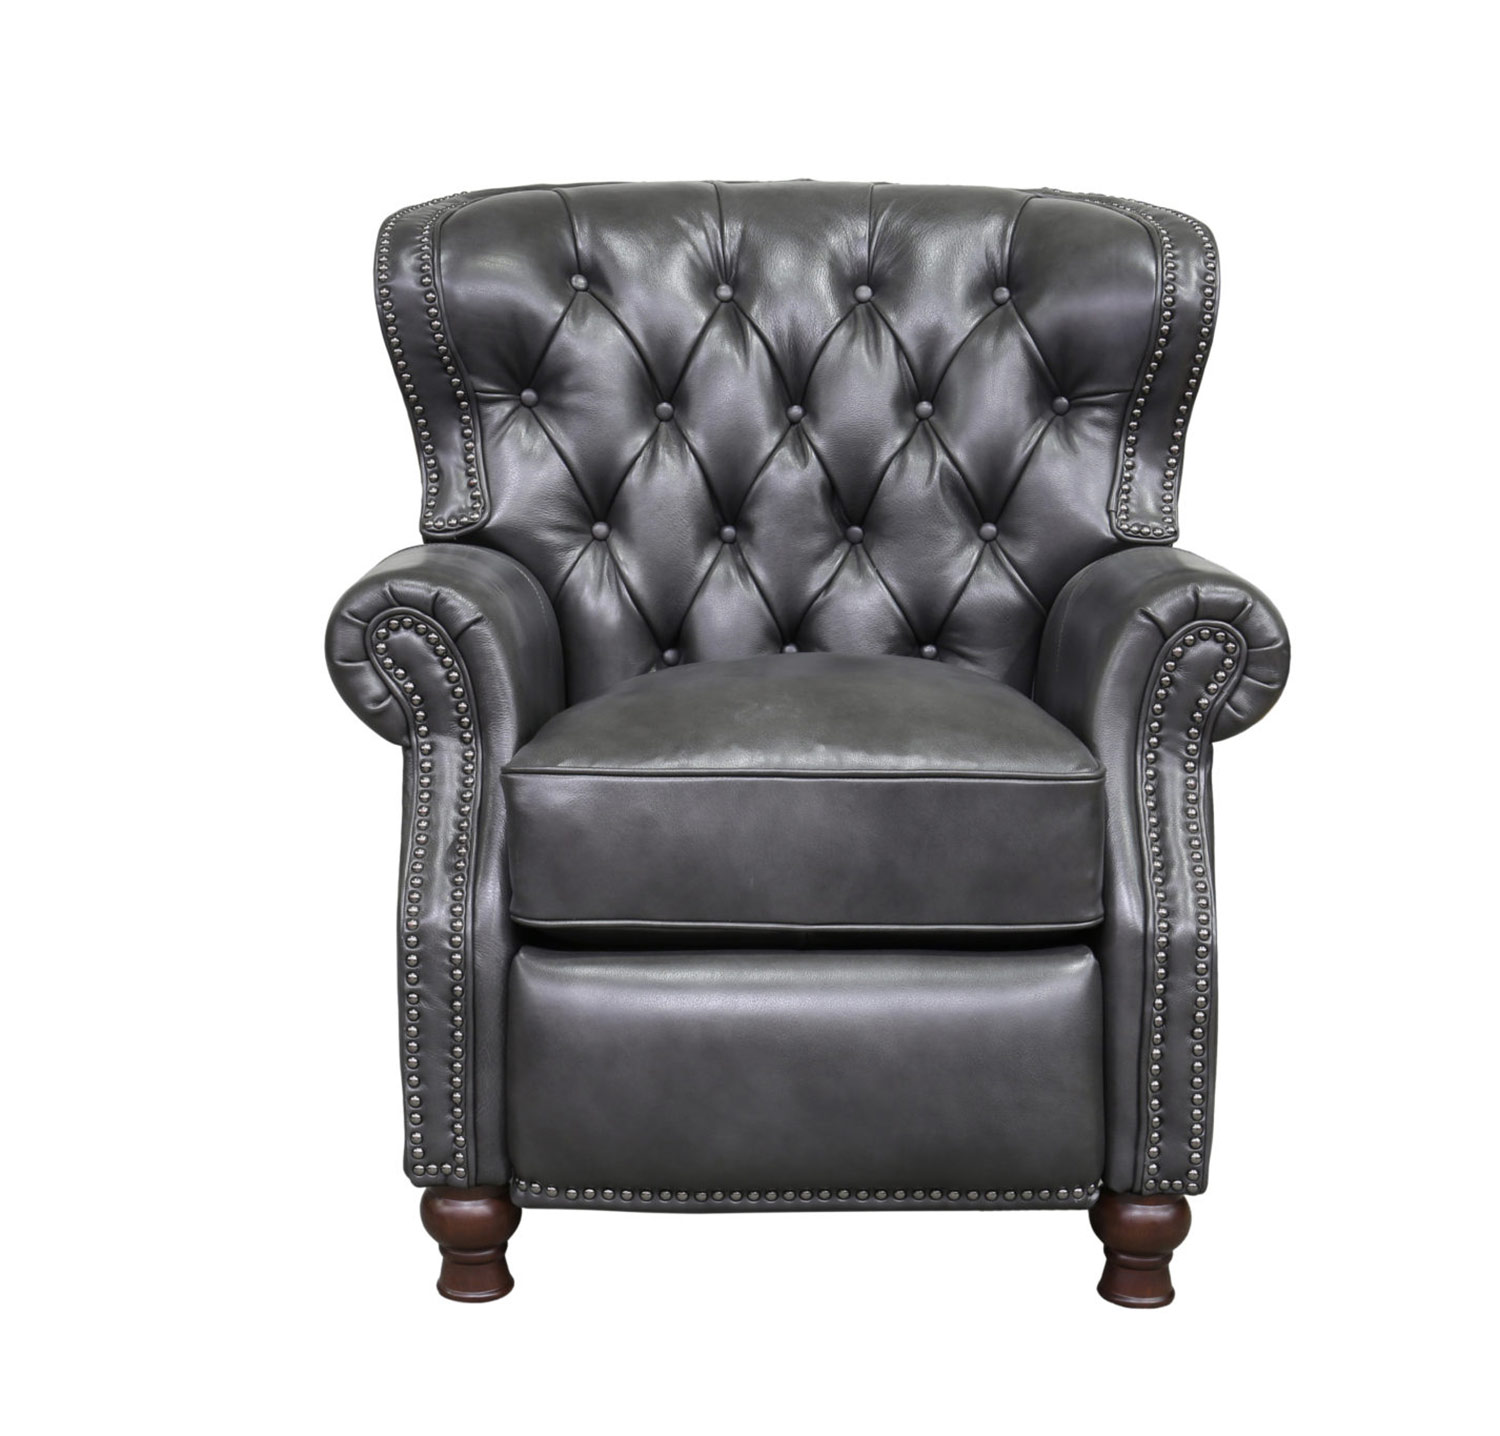 Barcalounger Presidential Recliner Chair - Wrenn Gray/all leather